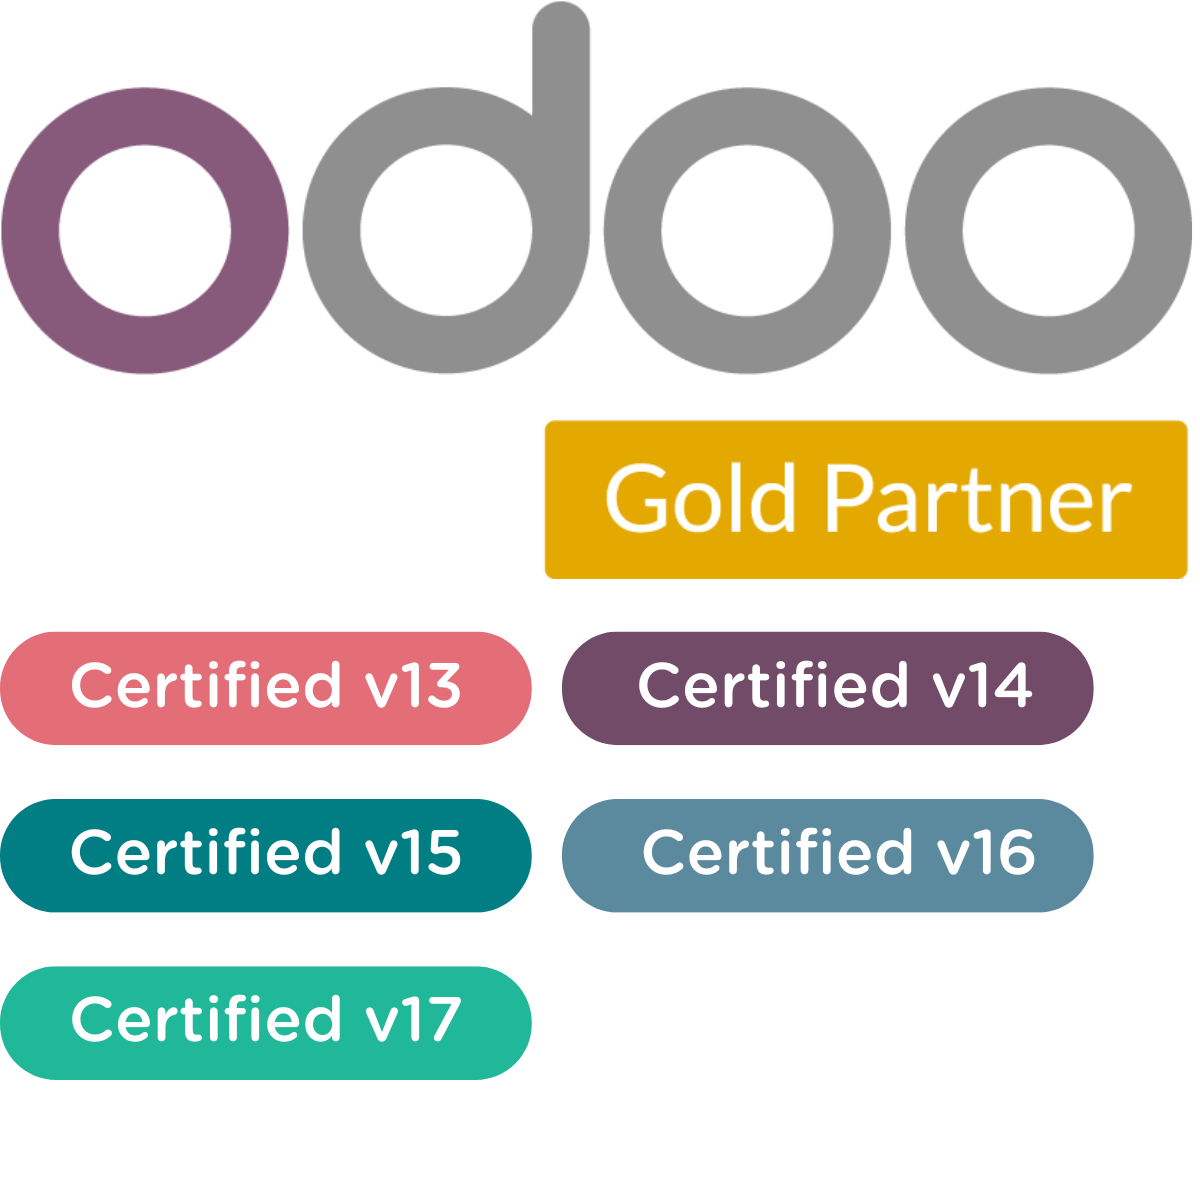 Odoo GOLD partner